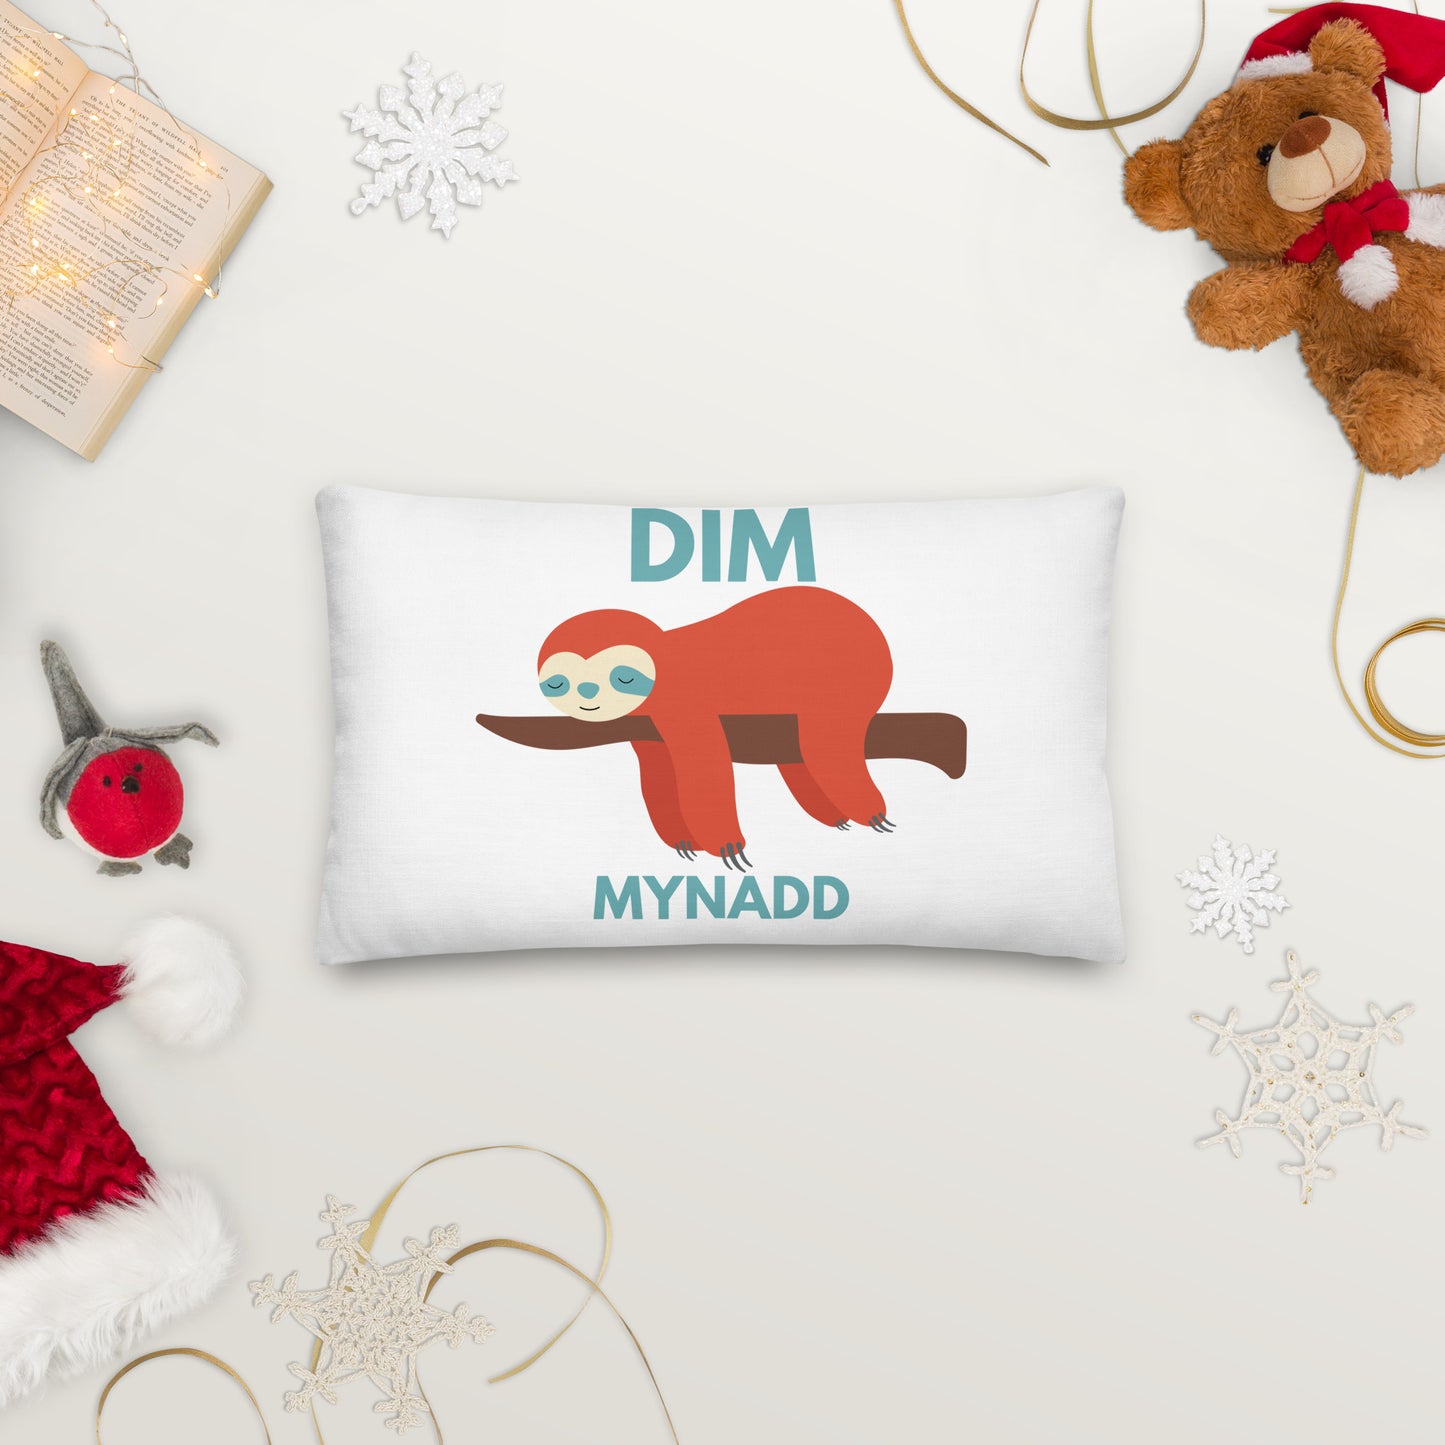 Dim Mynadd - Premium Pillow